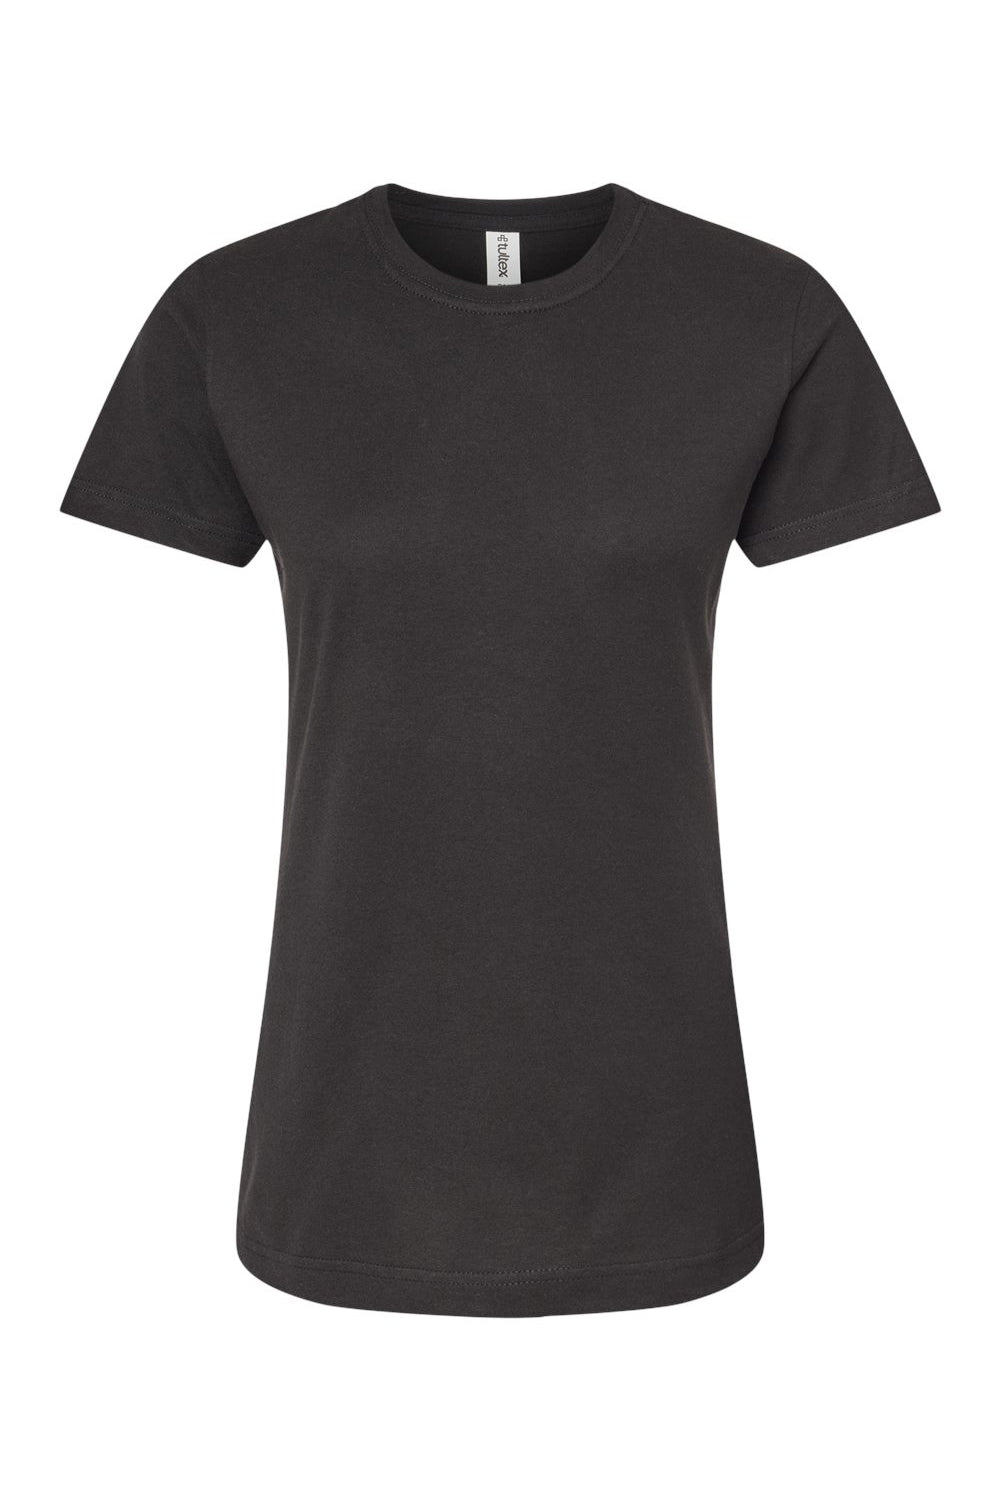 Tultex 216 Womens Fine Jersey Classic Fit Short Sleeve Crewneck T-Shirt Black Flat Front